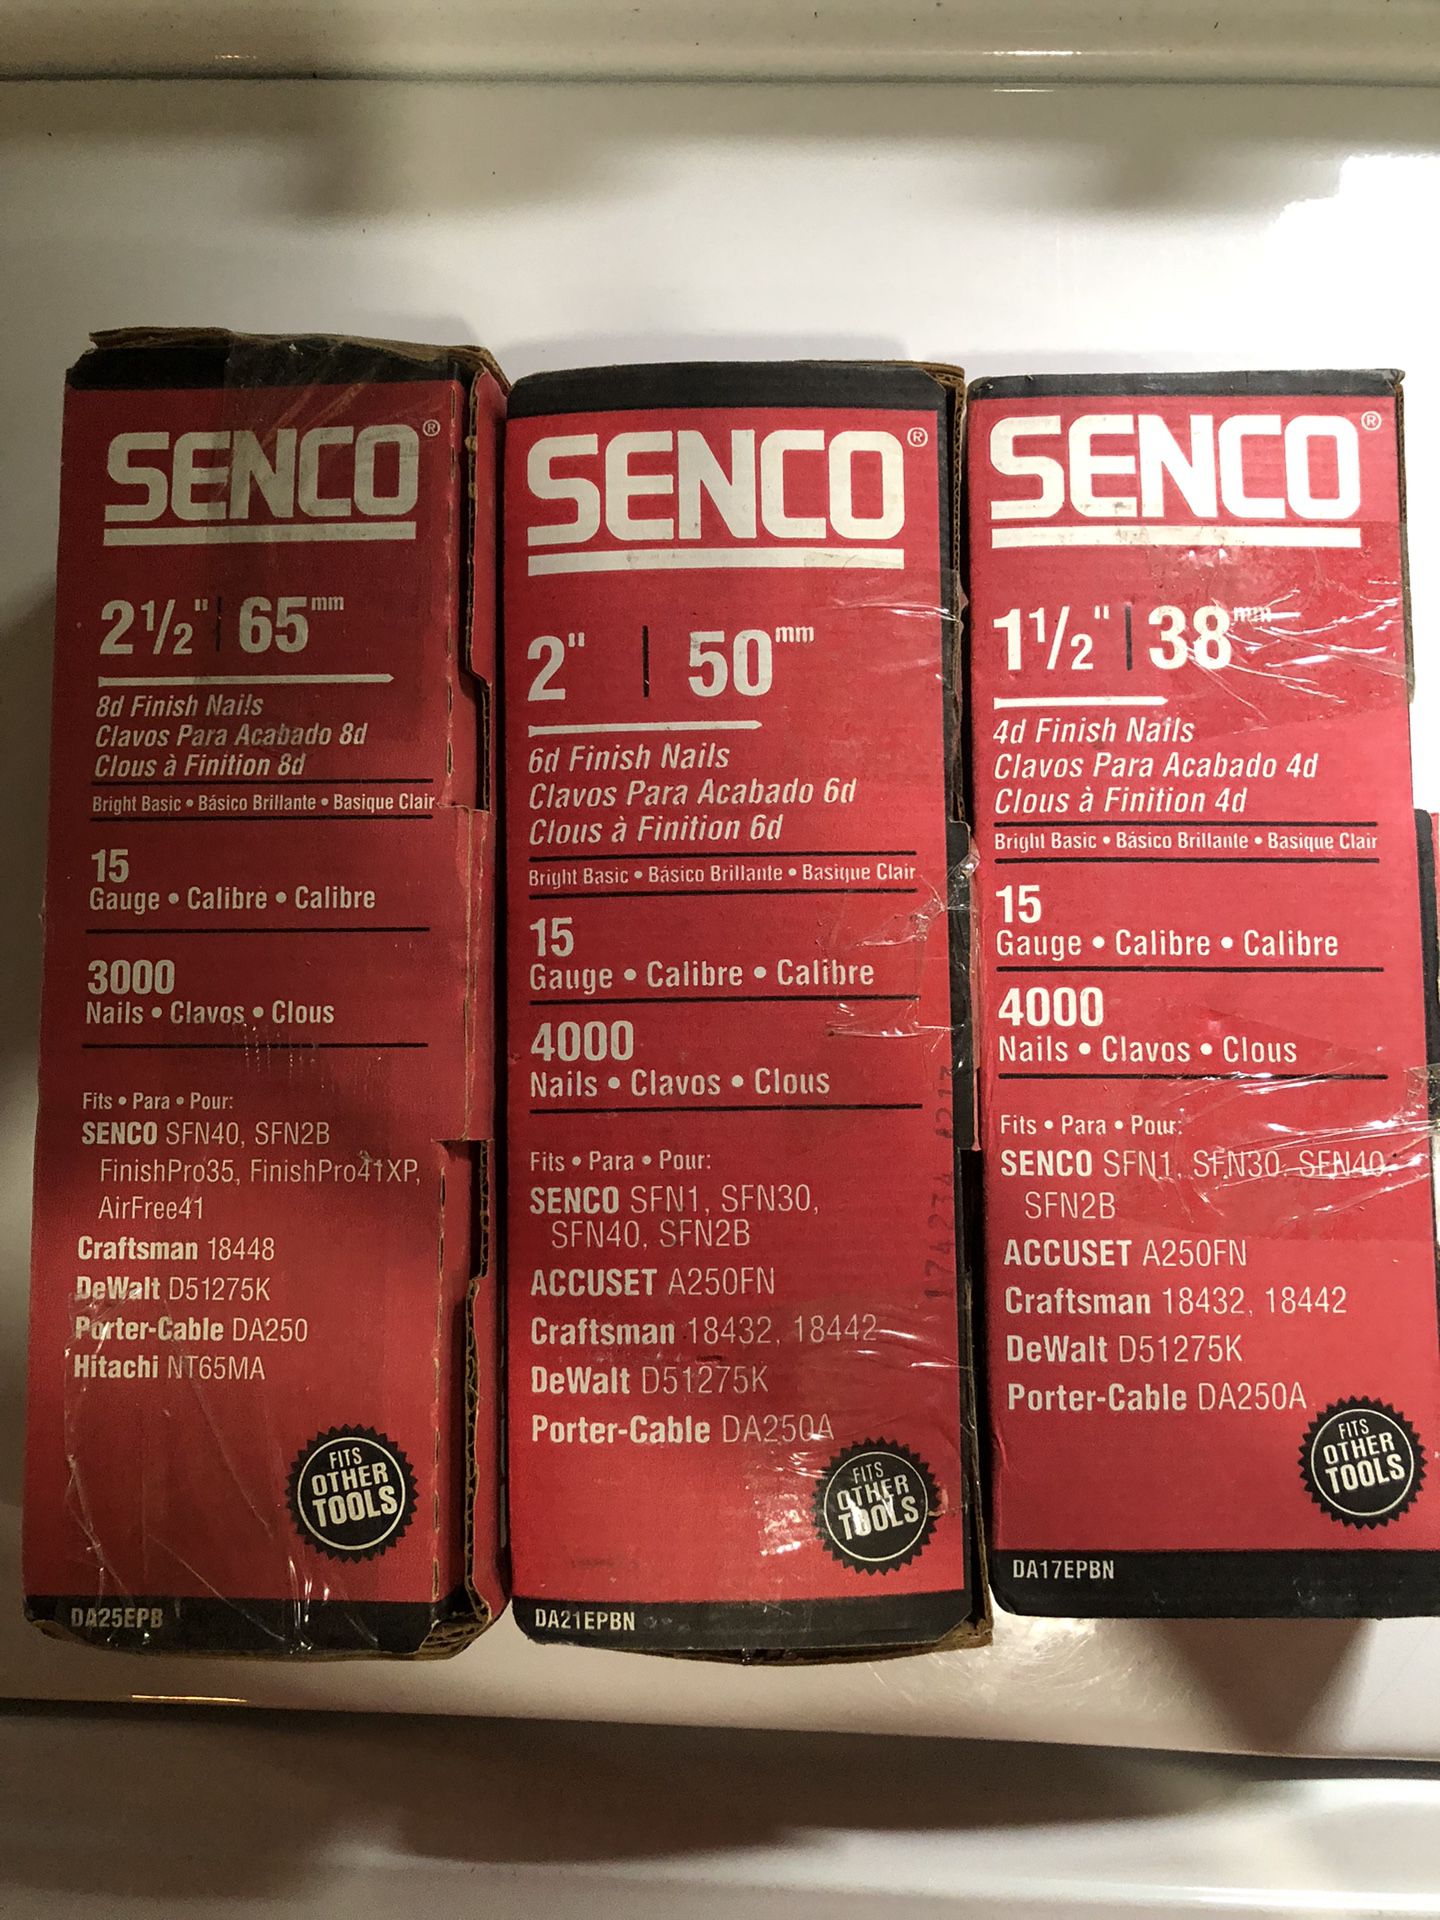 Senco 2 1/2 2 1 1/2 Finish Nails